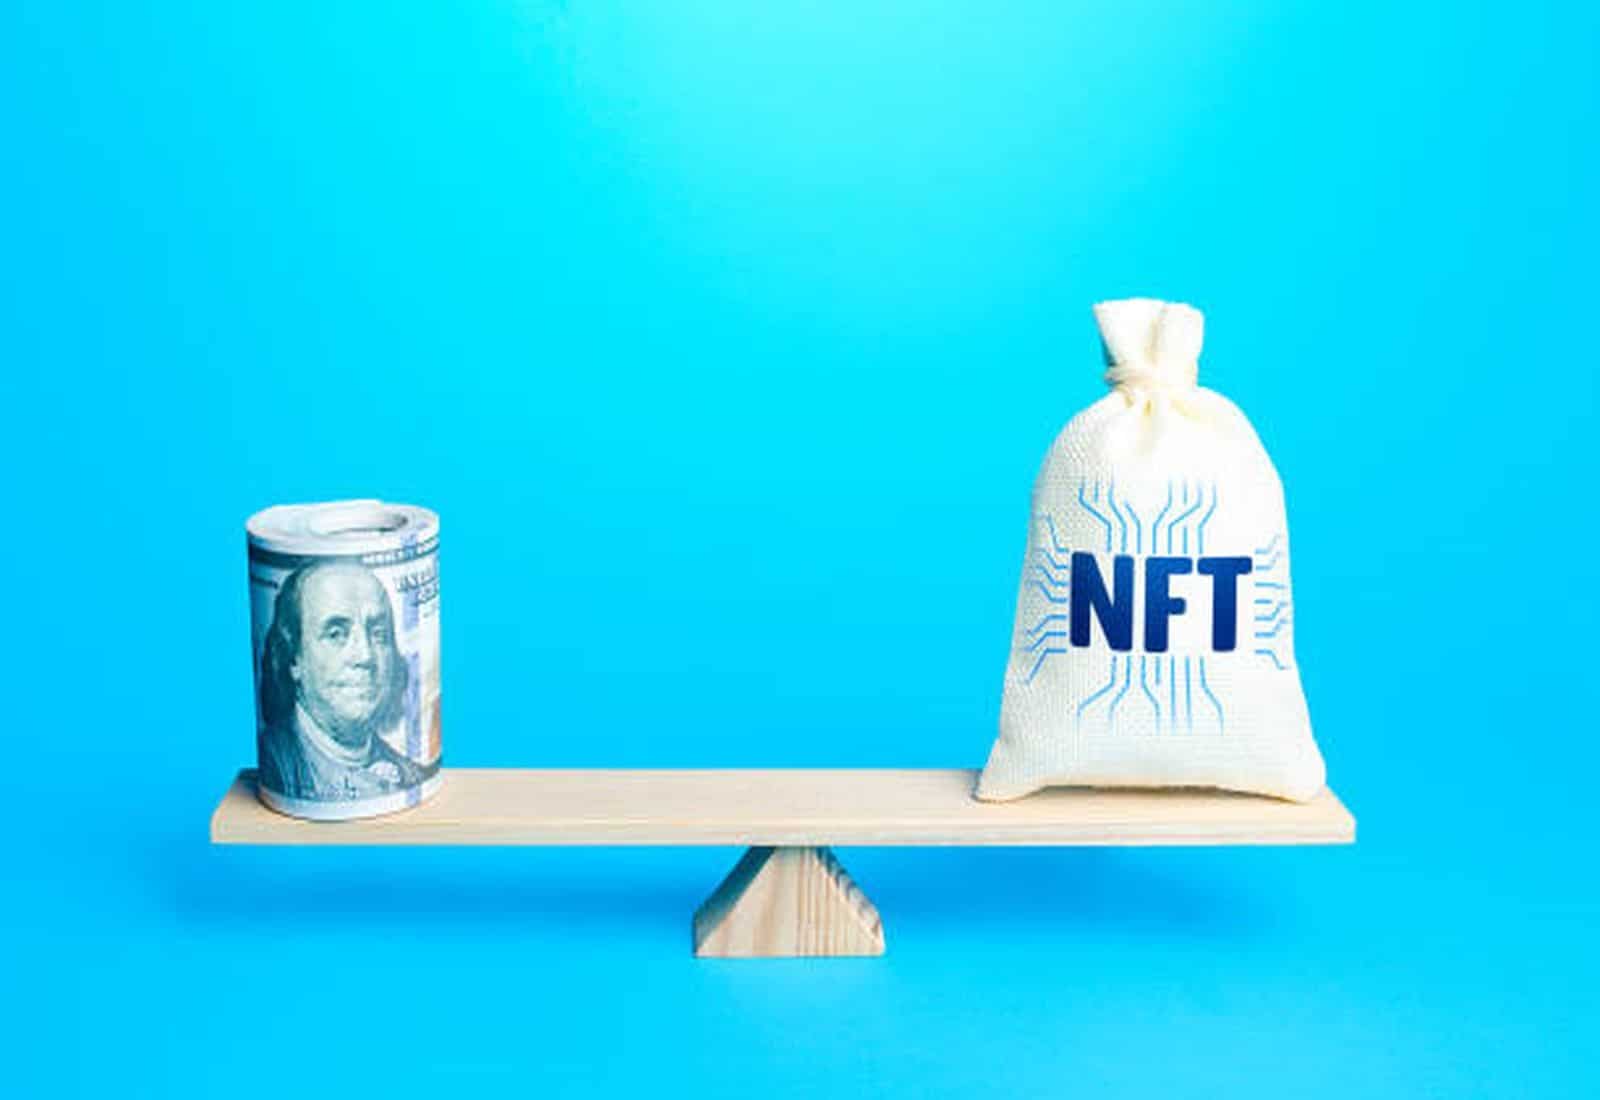 Buy NFTs